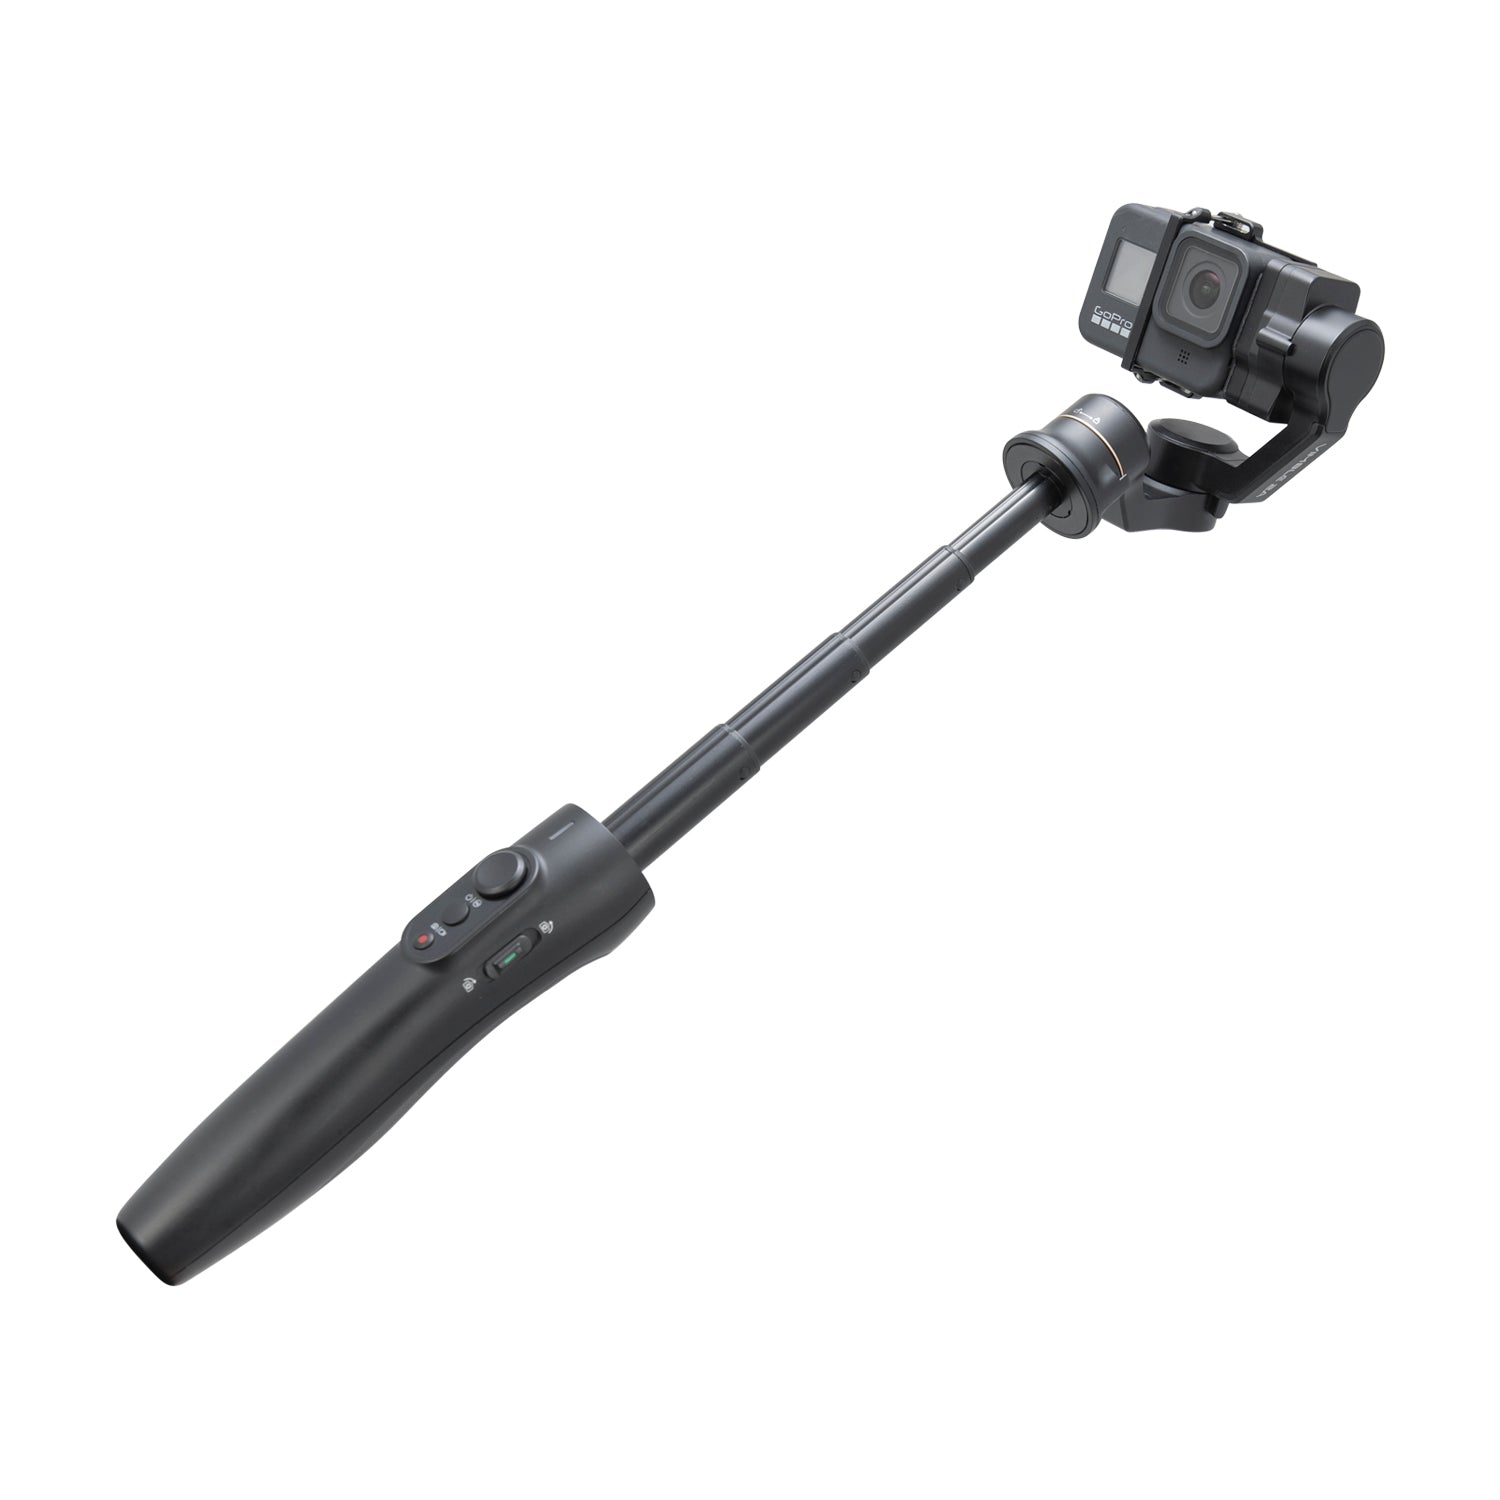 Feiyu New Vimble 2A Brushless Extensible Handheld Gimbal für GoPro Hero 8/7/6/5 / Yi 4K / SJCAM / AEE / Ricca Action / Sportkamera